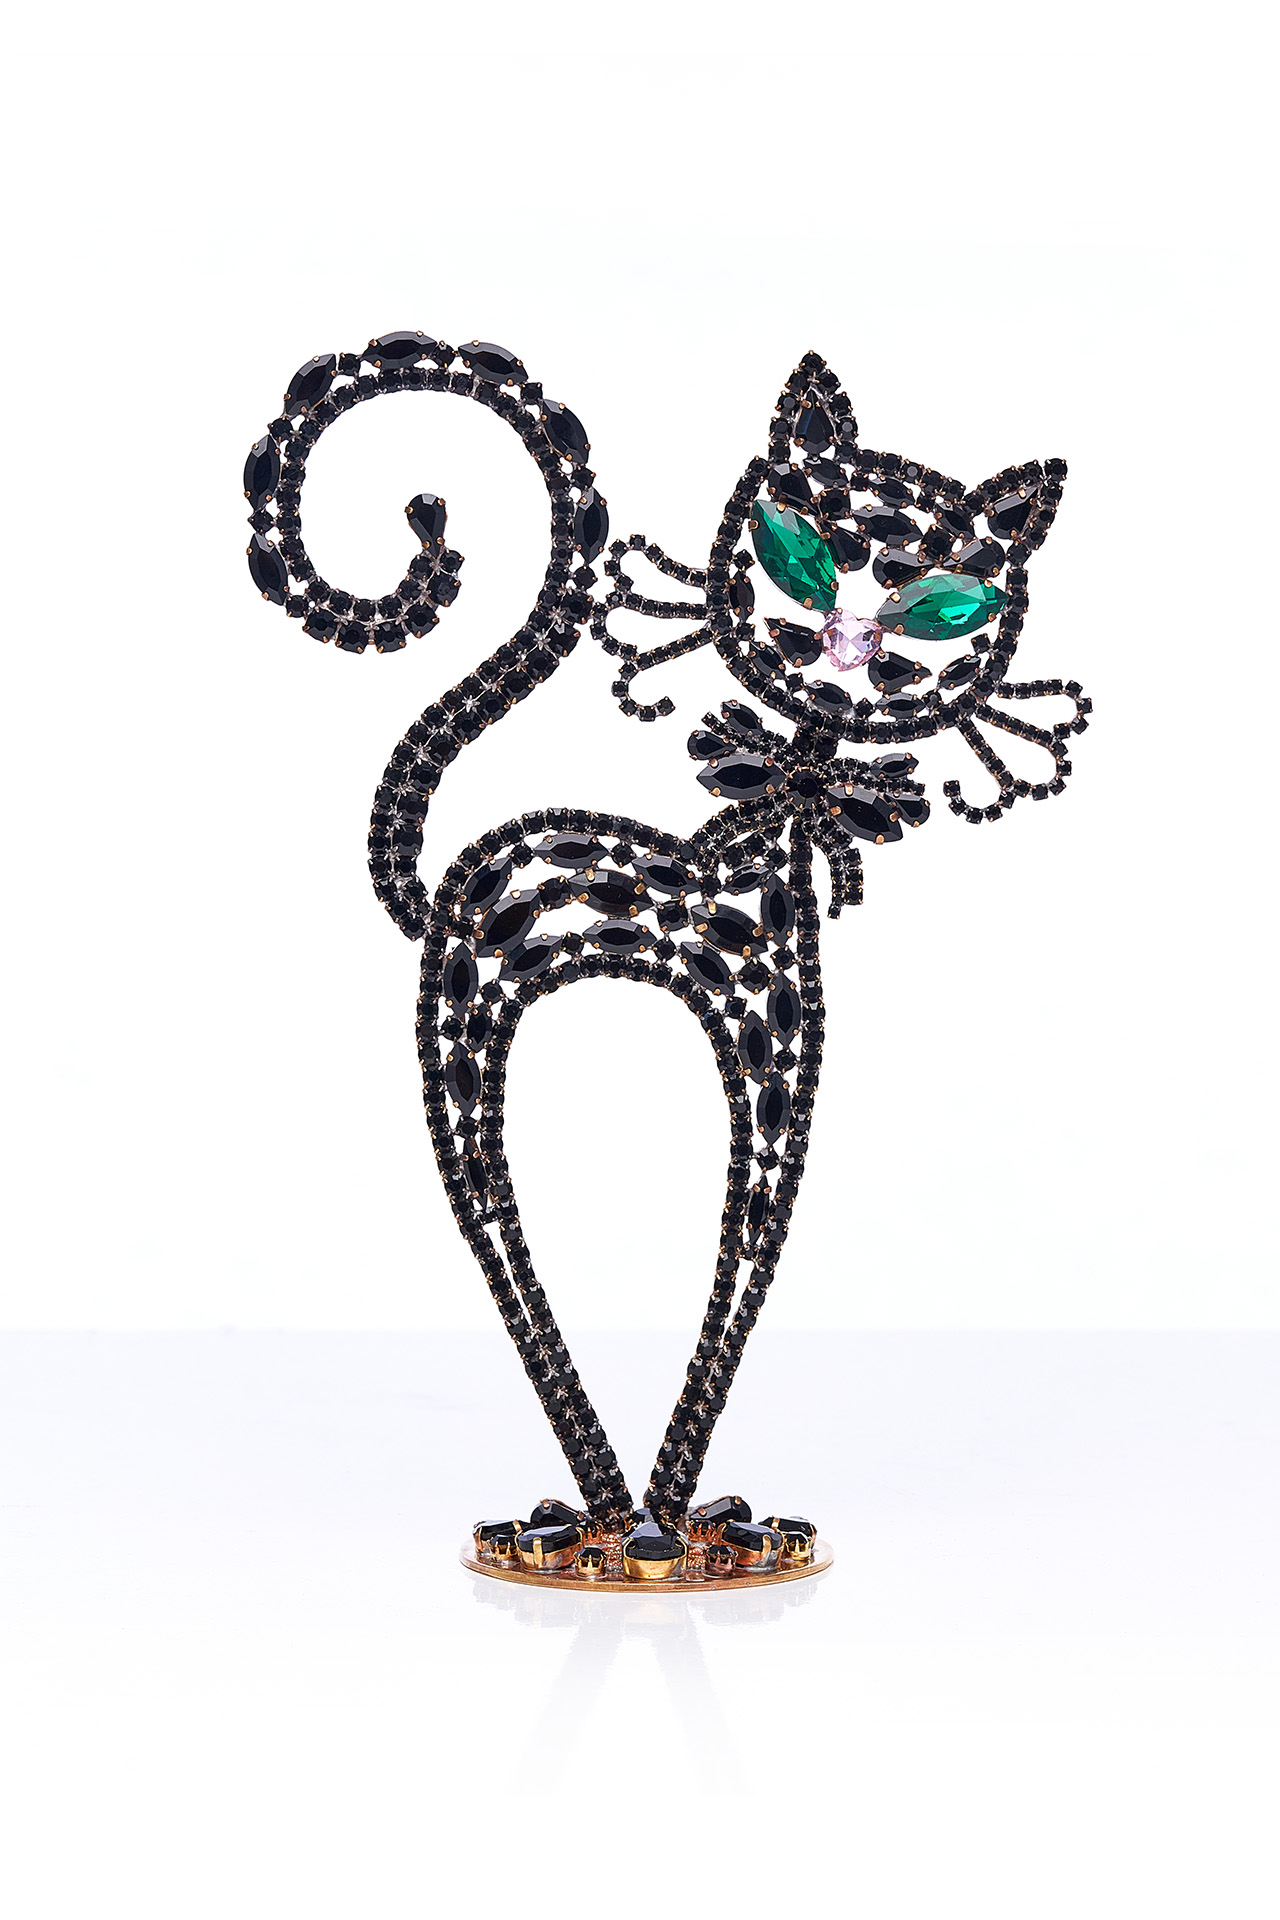 Rhinestones cat decoration handmade from black glimmering crystals